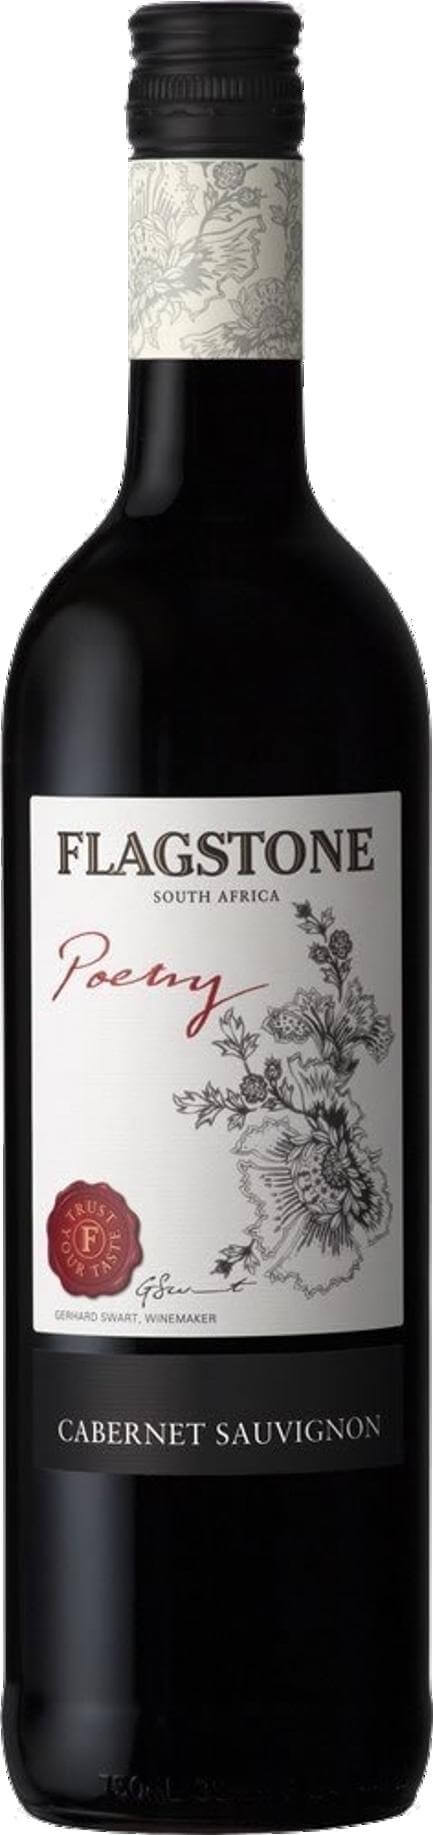 Sauvignon Wines | Western (Rotwein, Premium Poetry Cabernet Südafrika, Flagstone Curry Cape) oHG